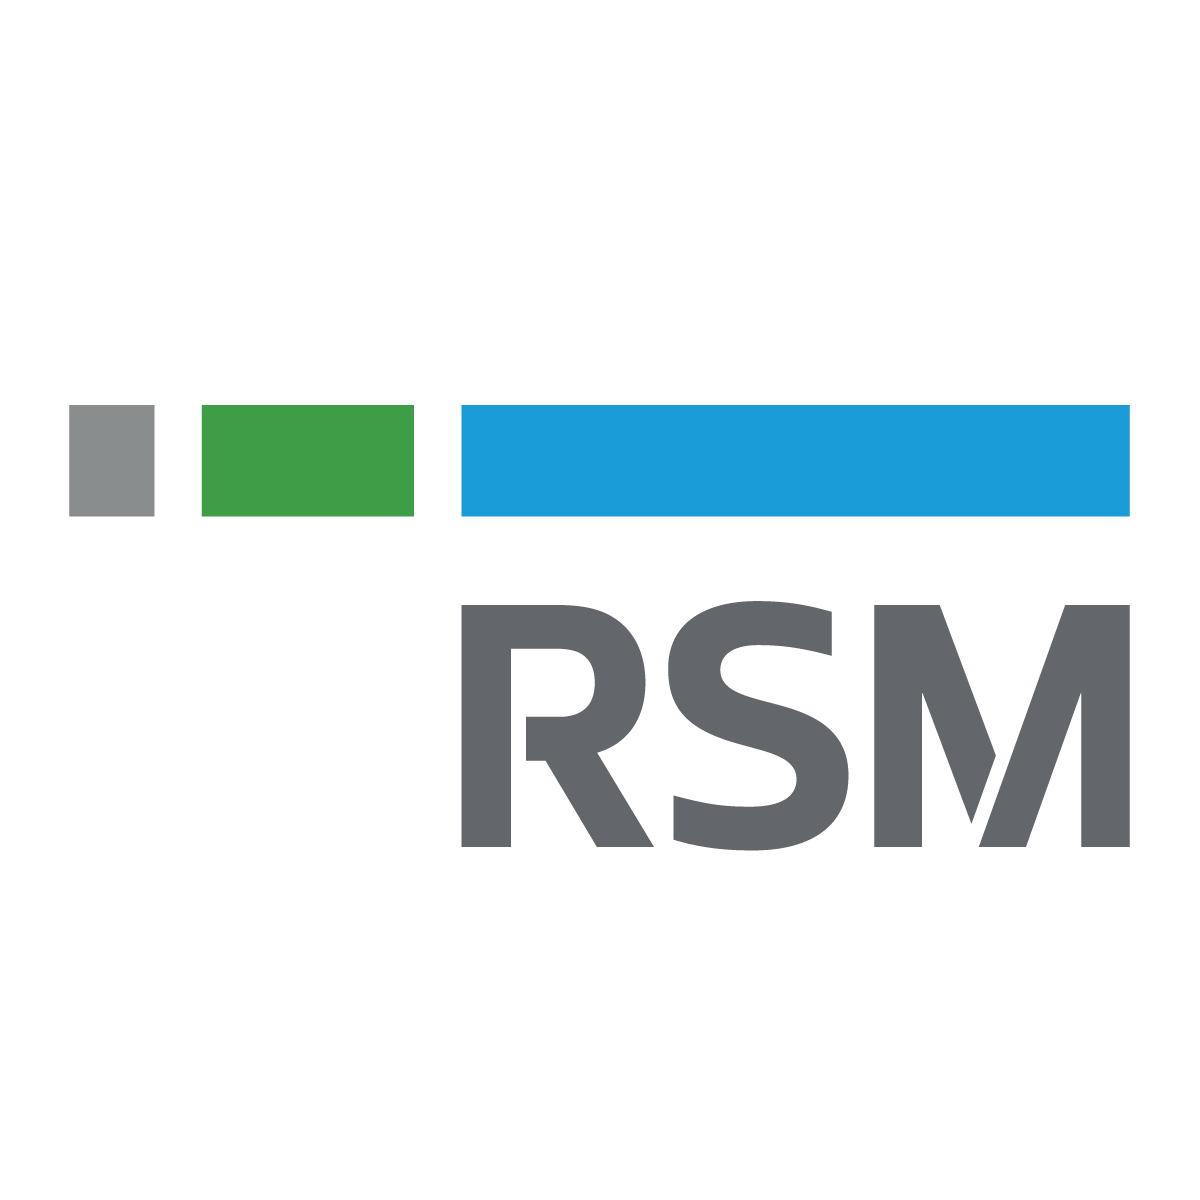 RSM Australia